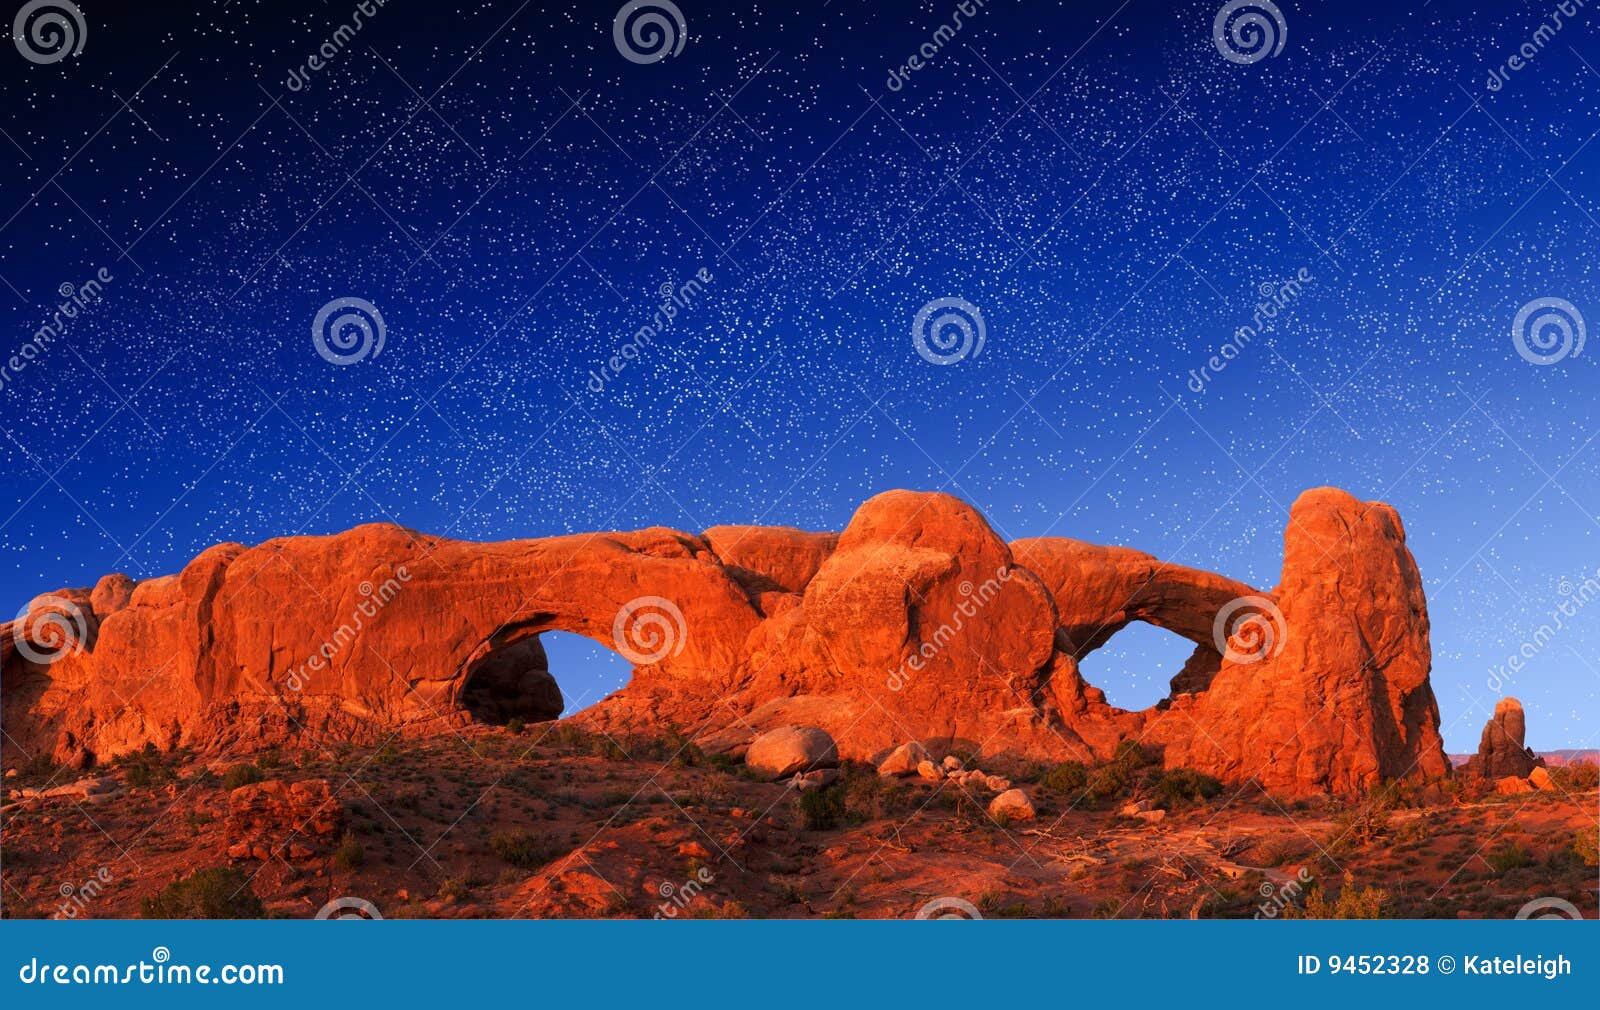 rock arch windows at night